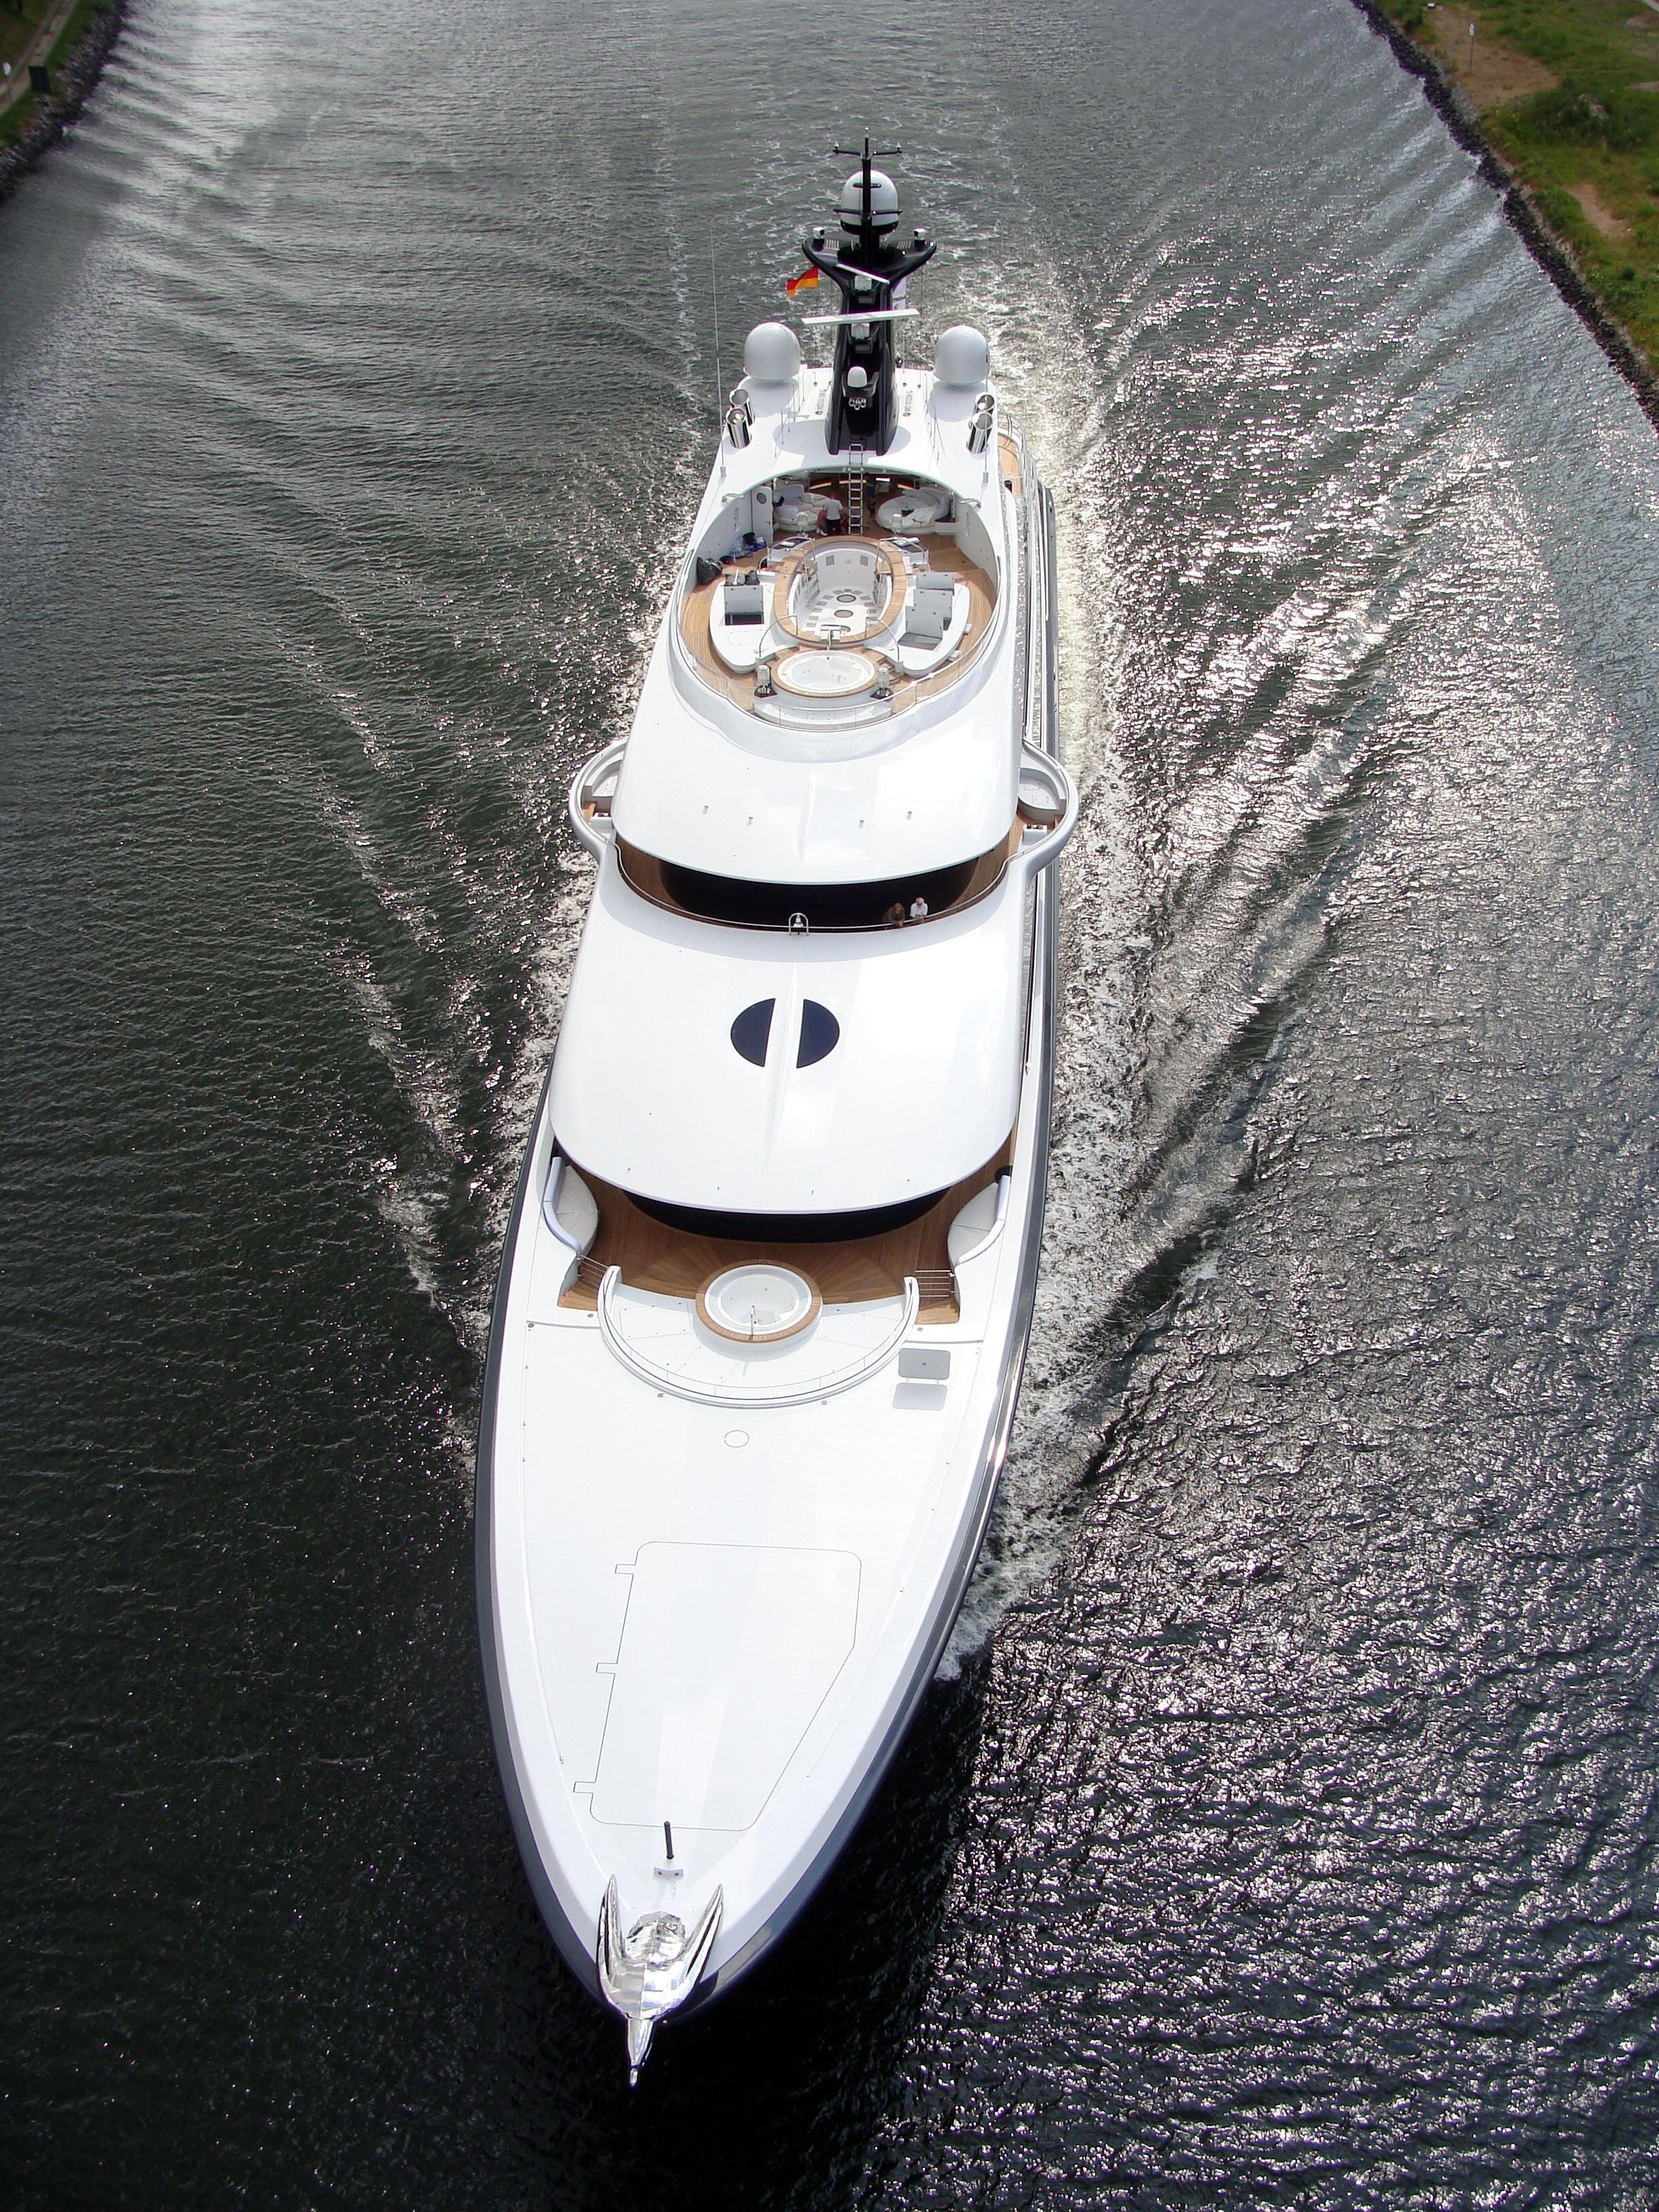 The 90m Yacht PHOENIX 2